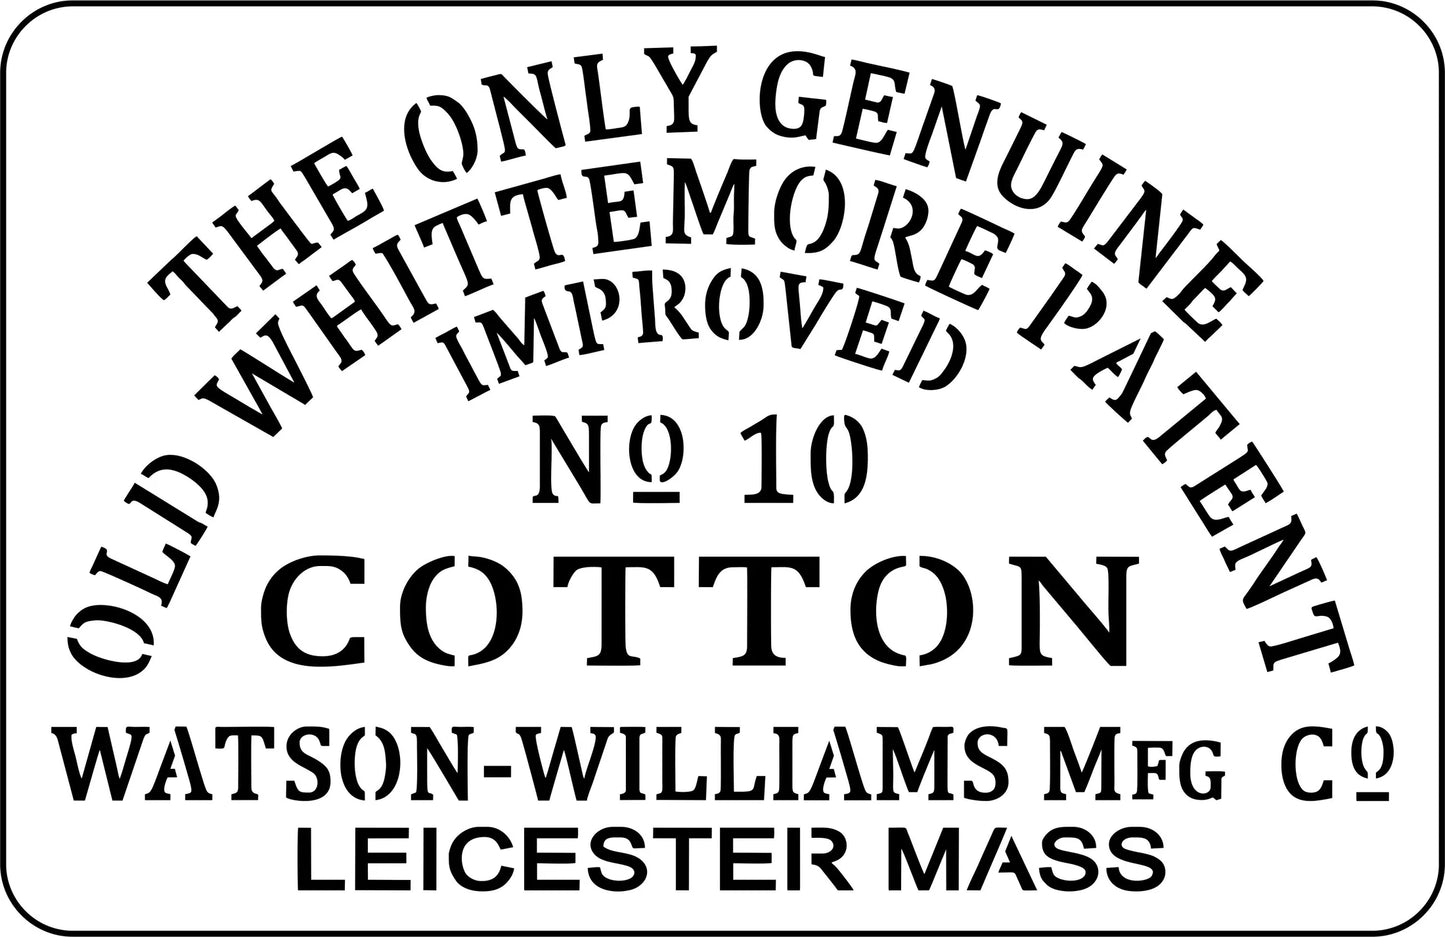 "Old Whittemore Cotton" Stencil